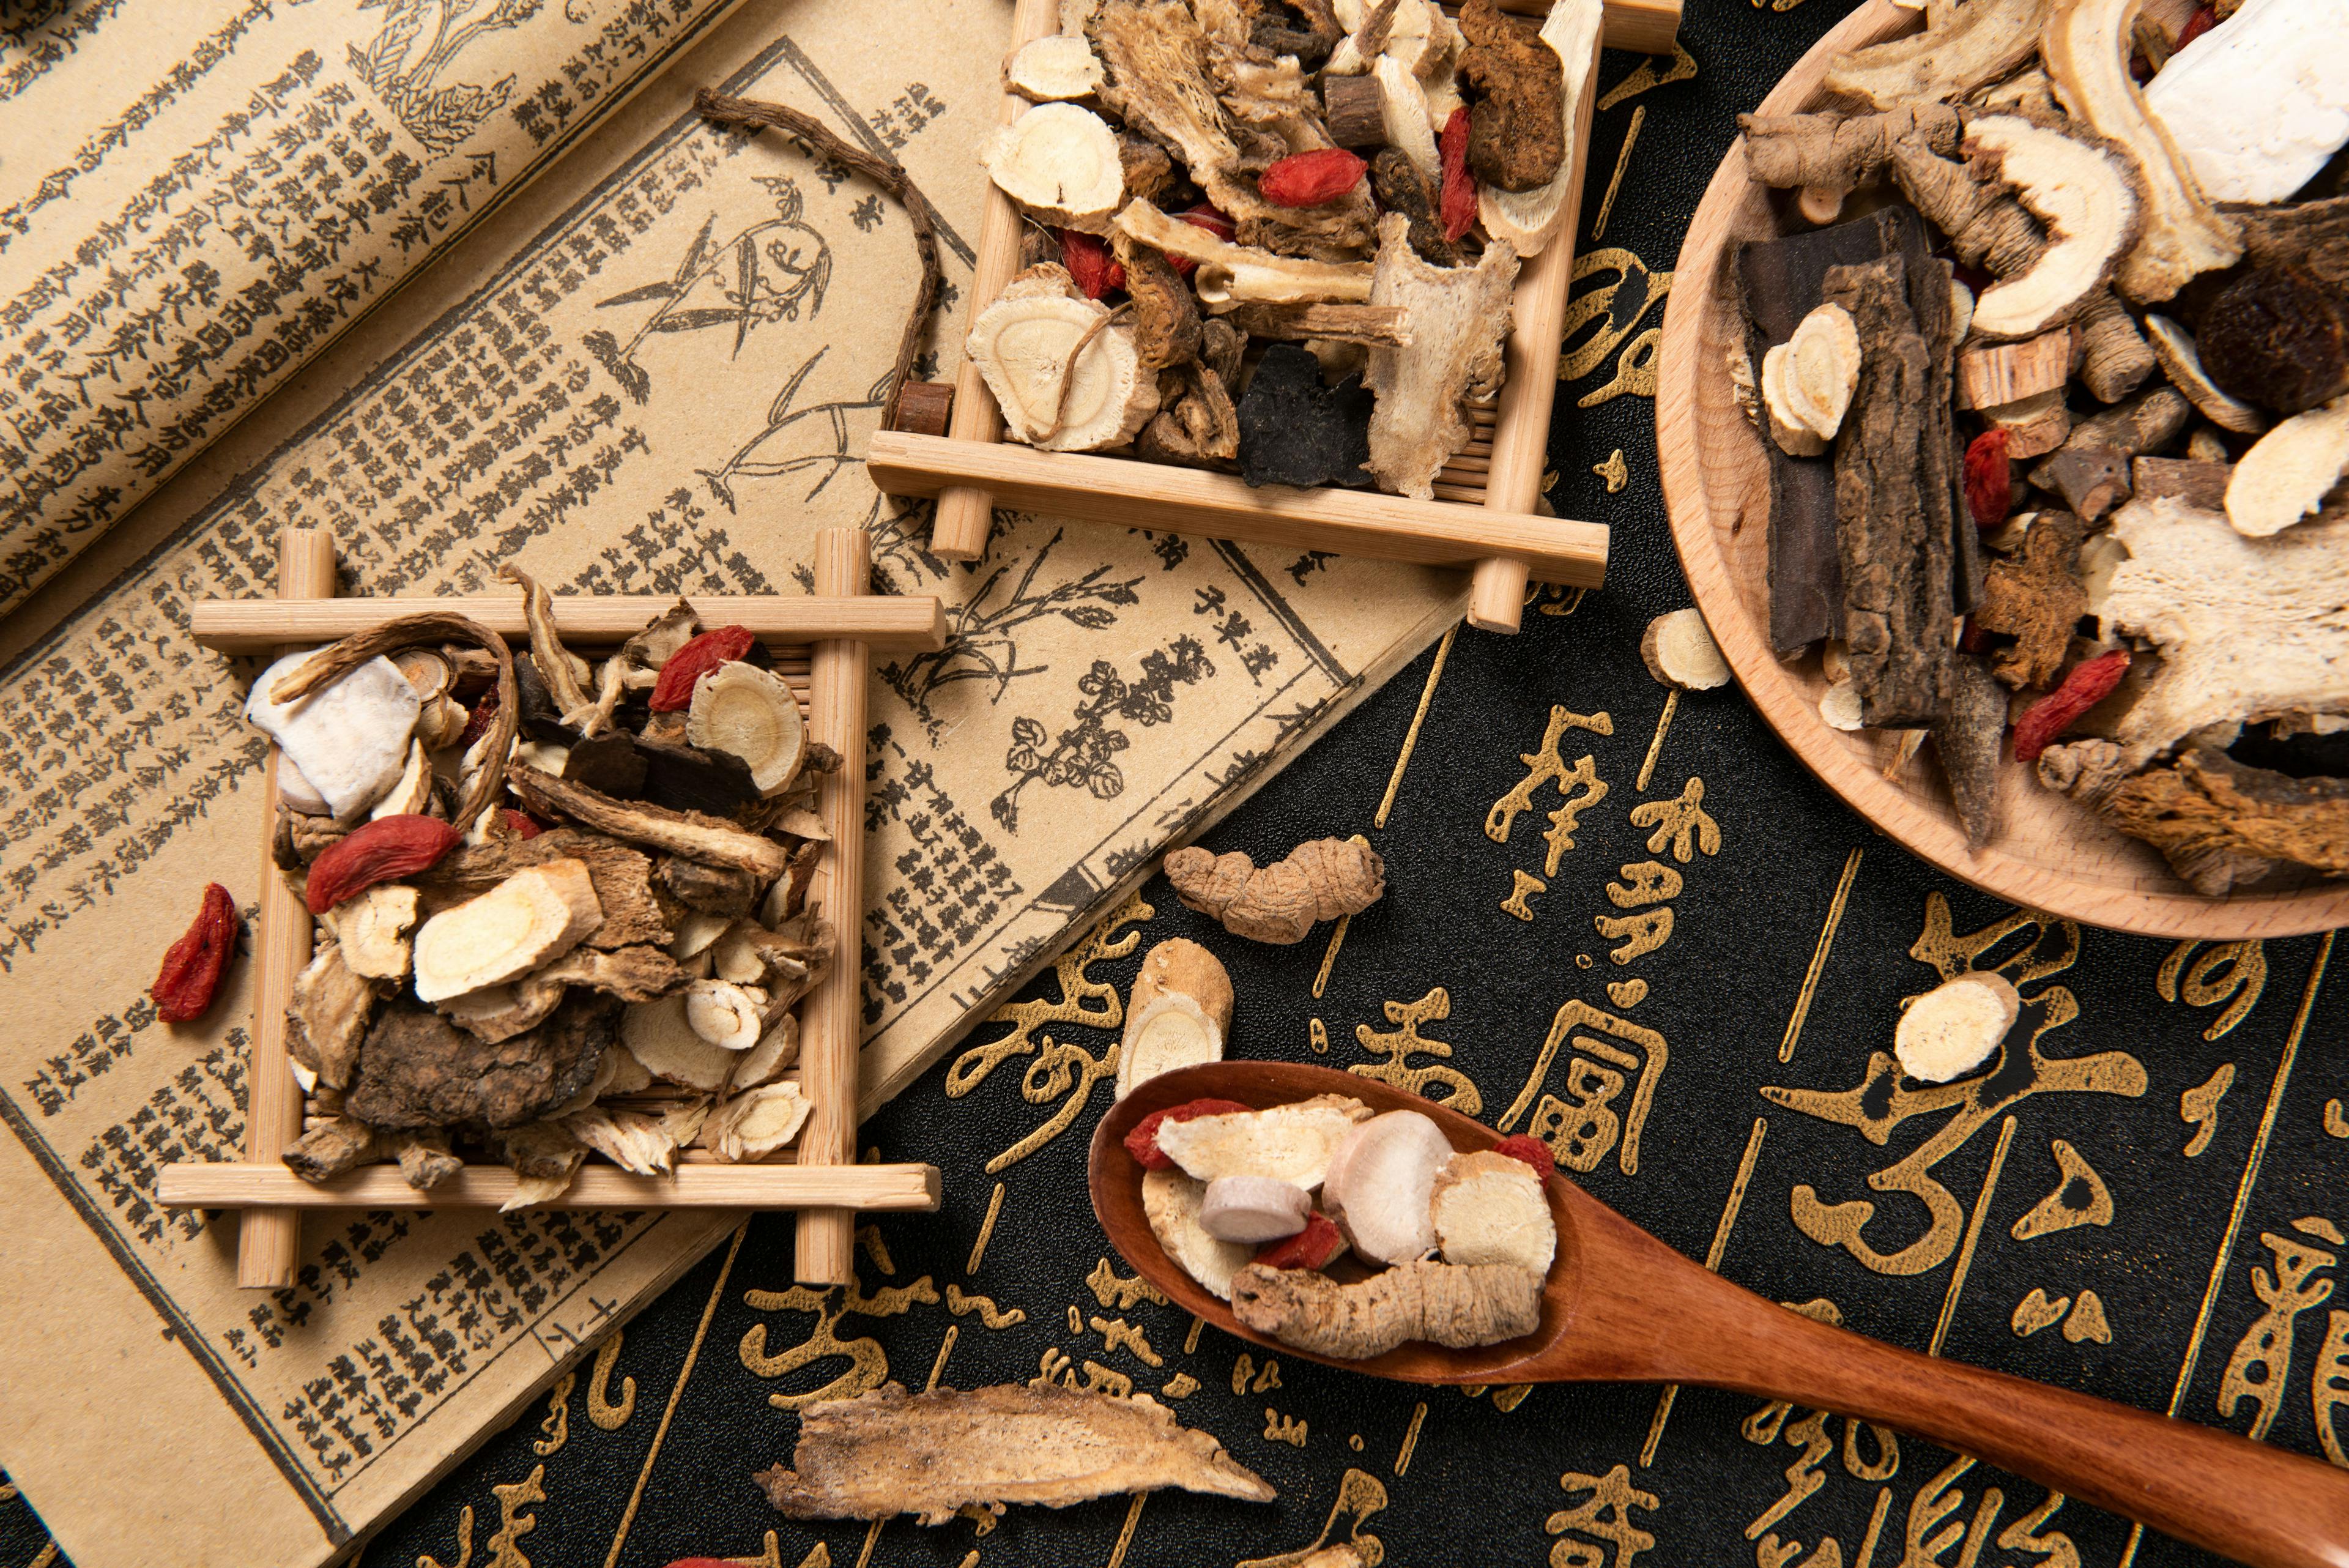 Chinese herbal medicine selection on calligraphy background | Image Credit: © zhikun sun - stock.adobe.com